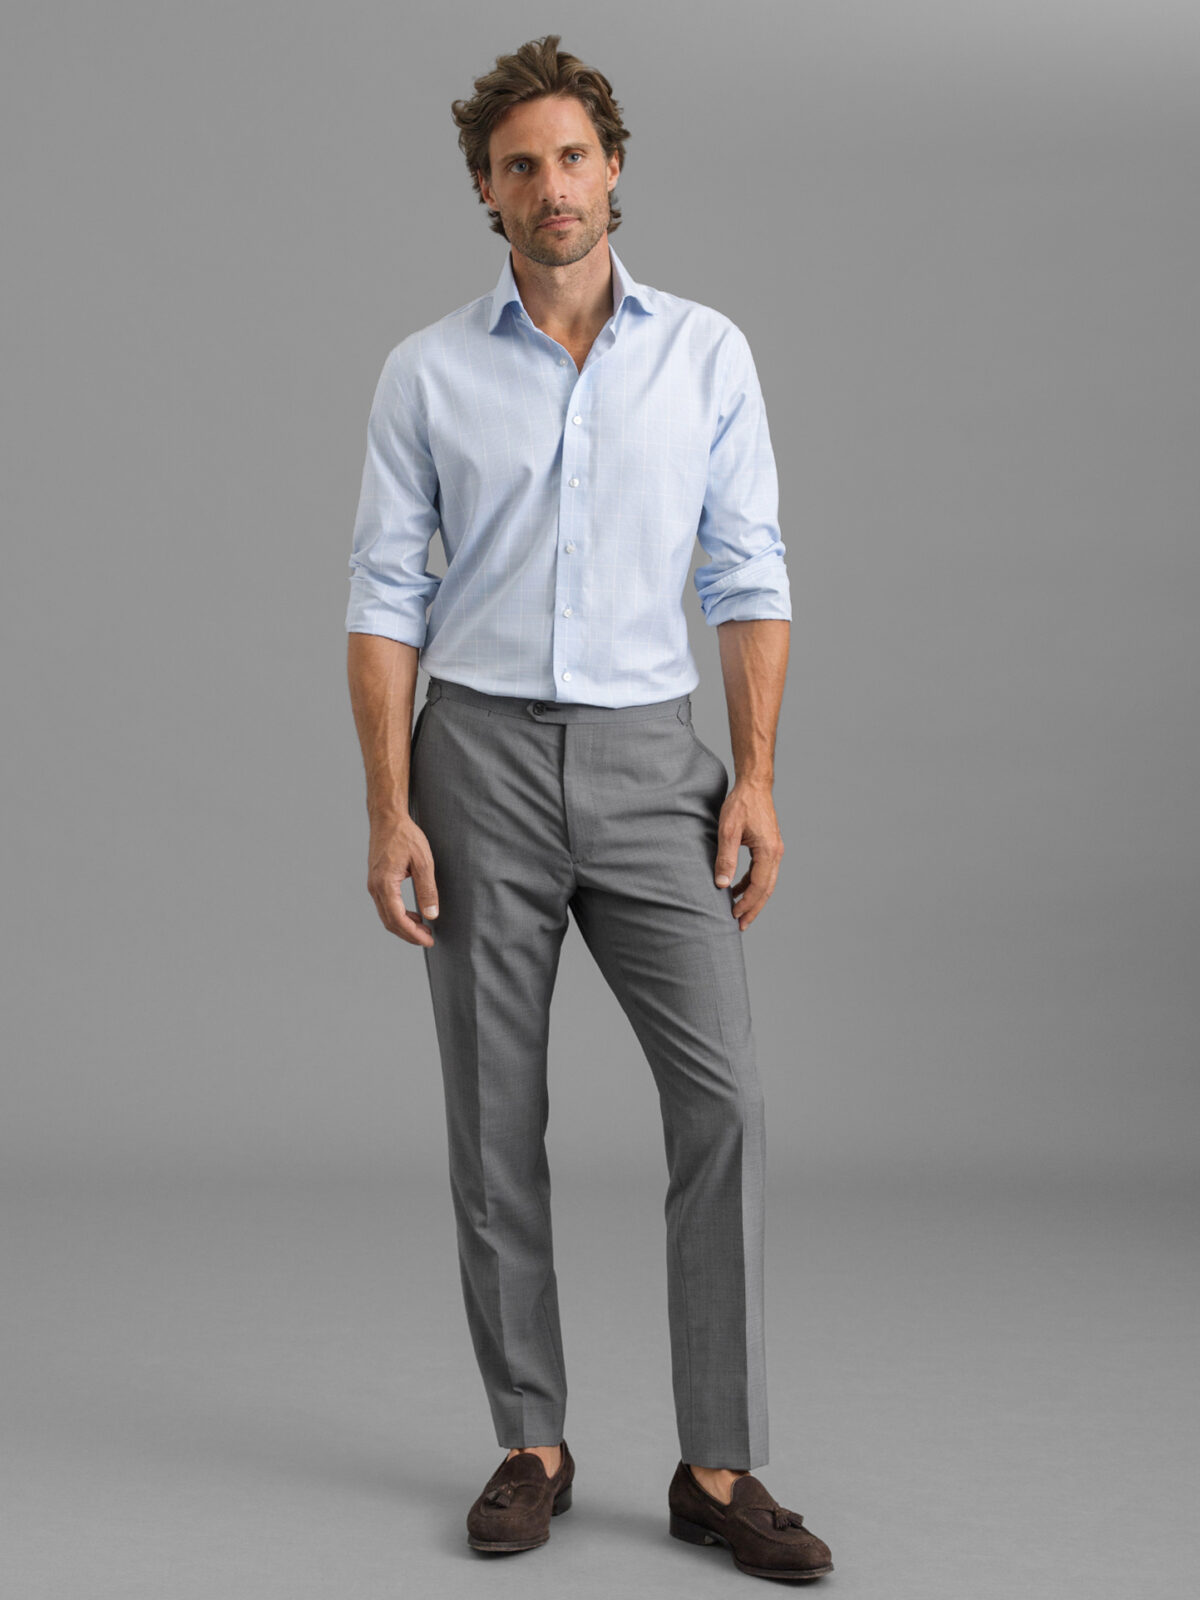 Grey Shirt Matching Pant Ideas | Grey Shirt Combination Pants - TiptopGents  | Maroon shirt outfit, Red shirt outfits, Maroon shirts